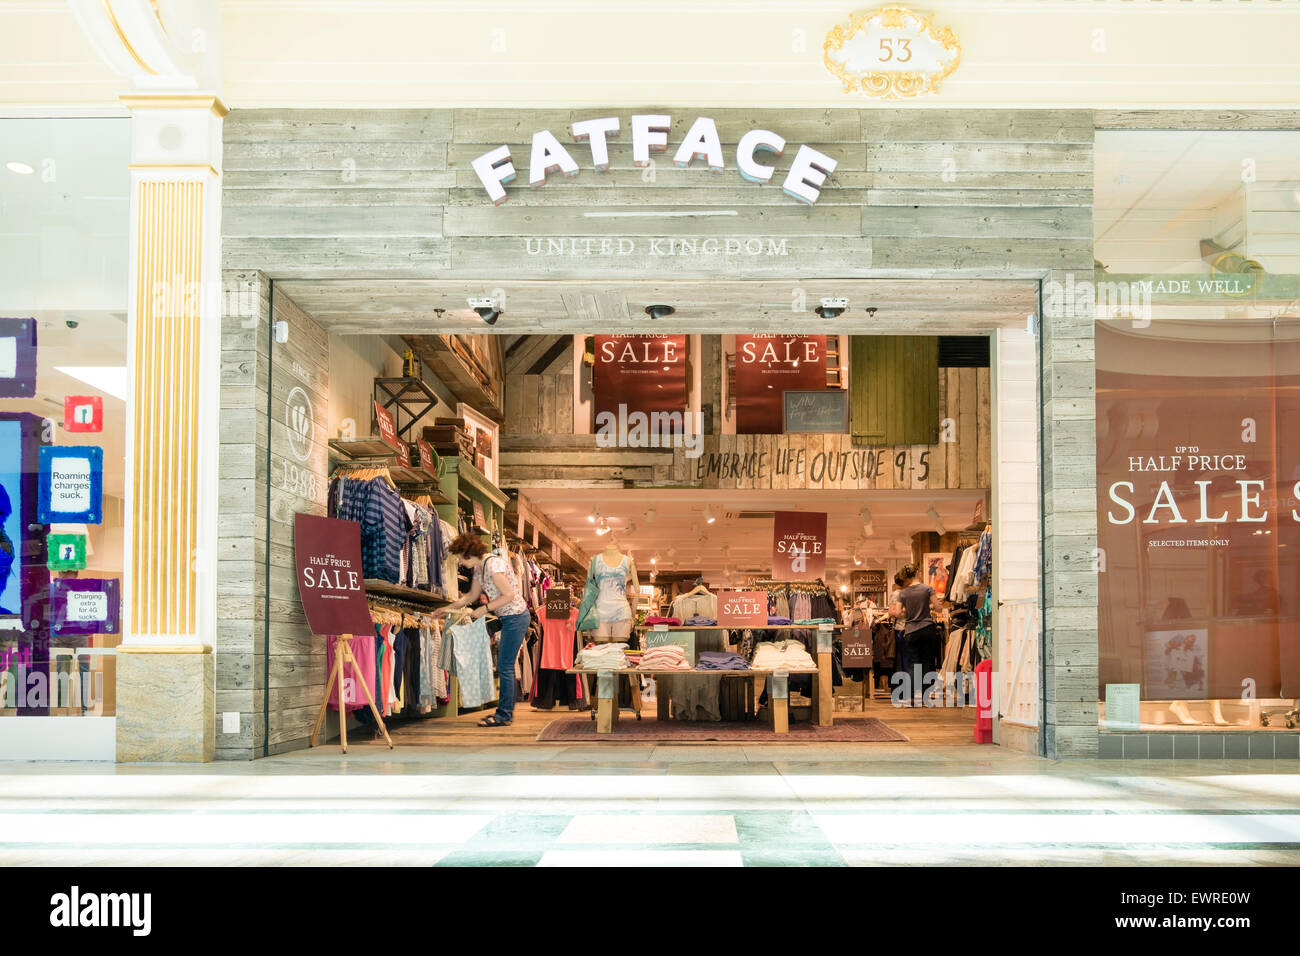 Fatface Shop, UK. Stockfoto